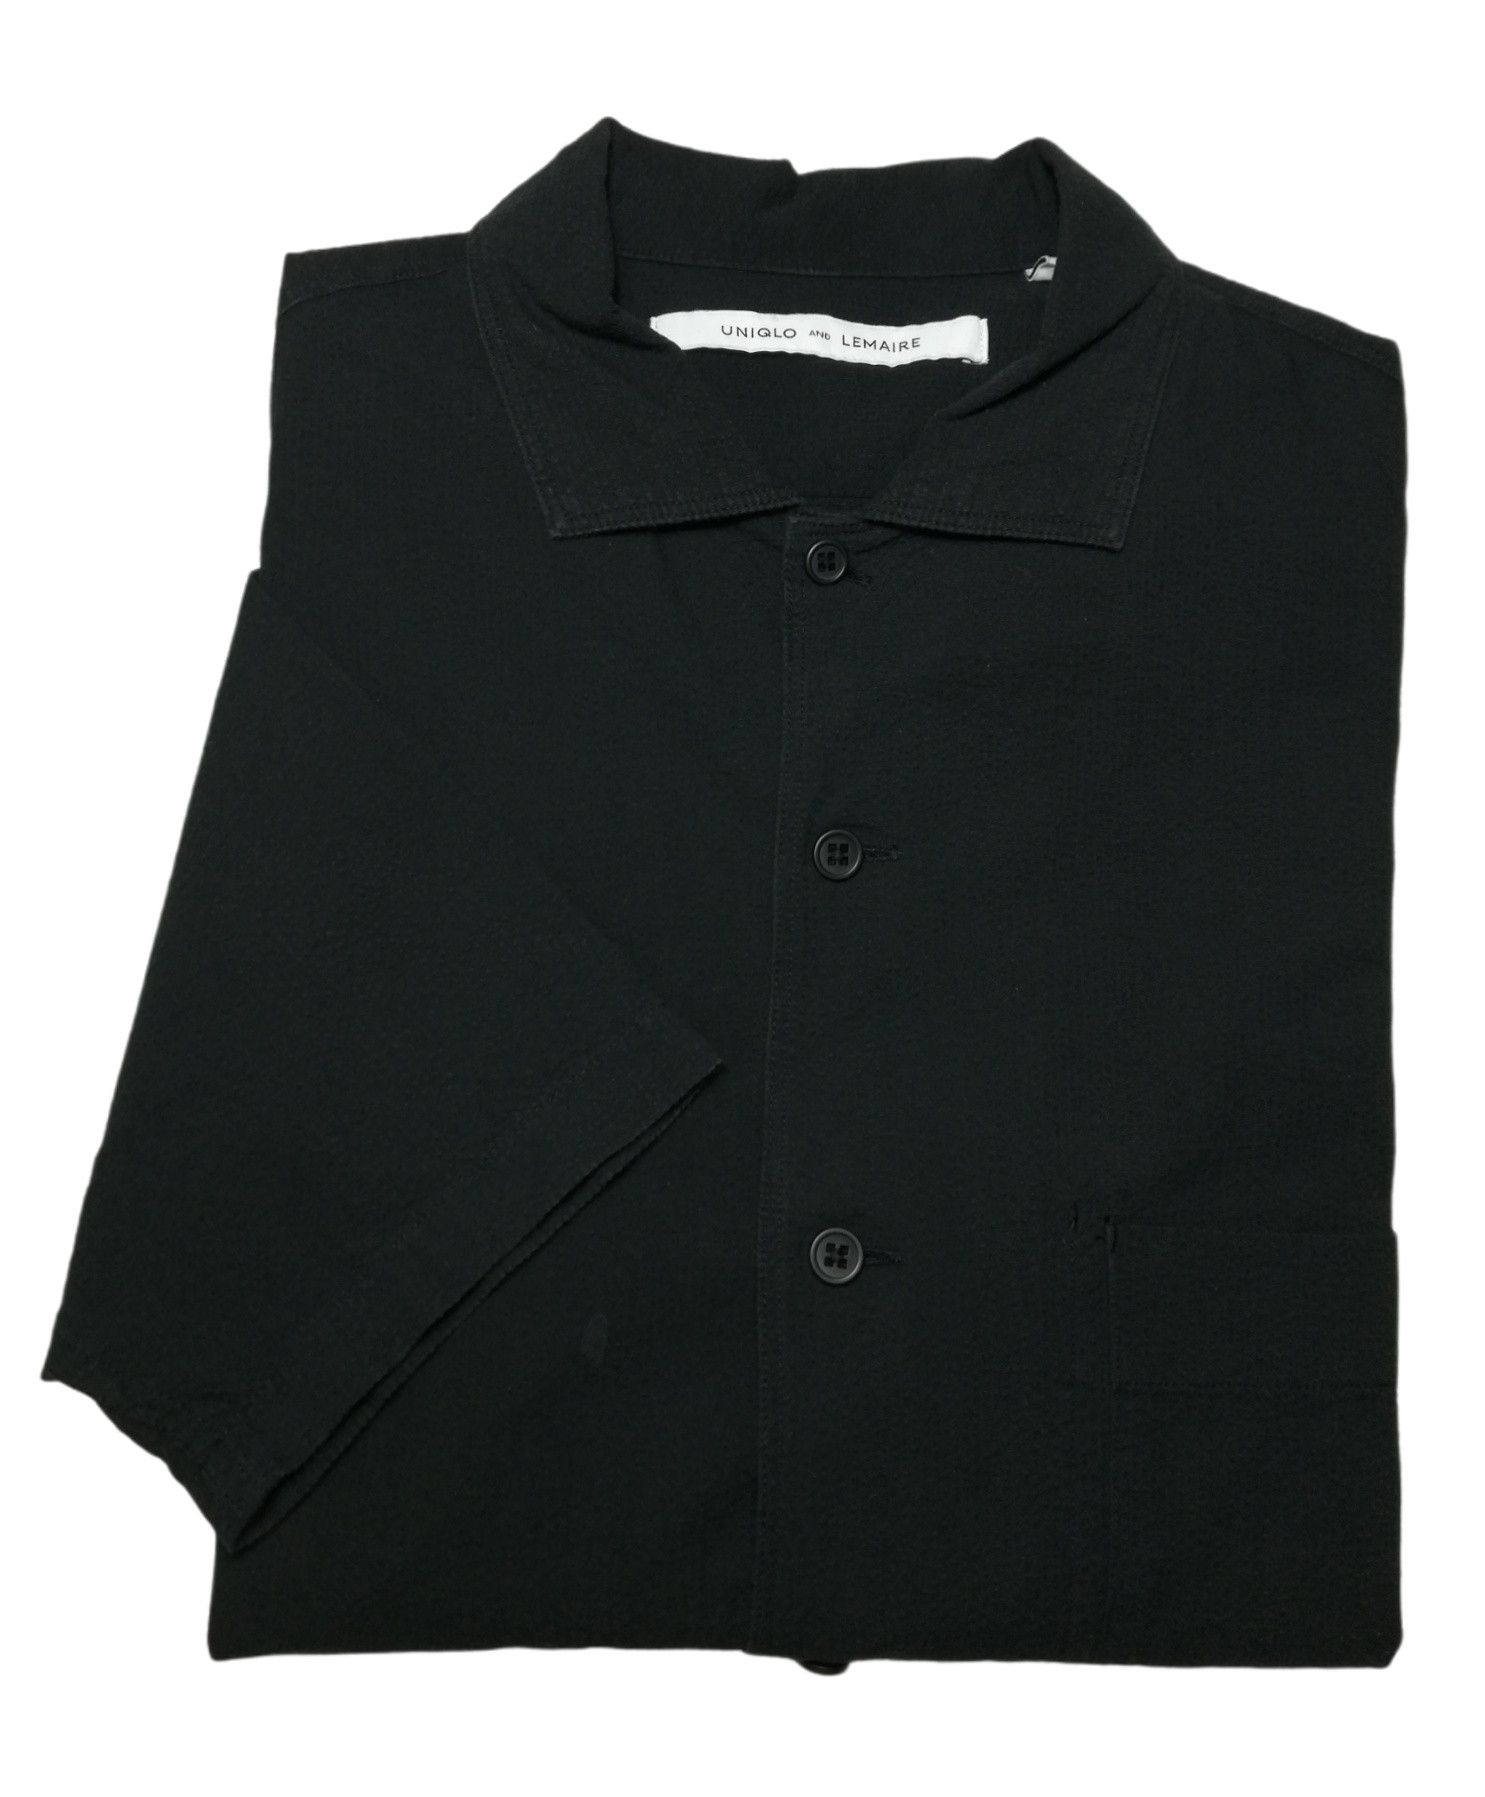 LEMAIRE short-sleeve shirt - Black